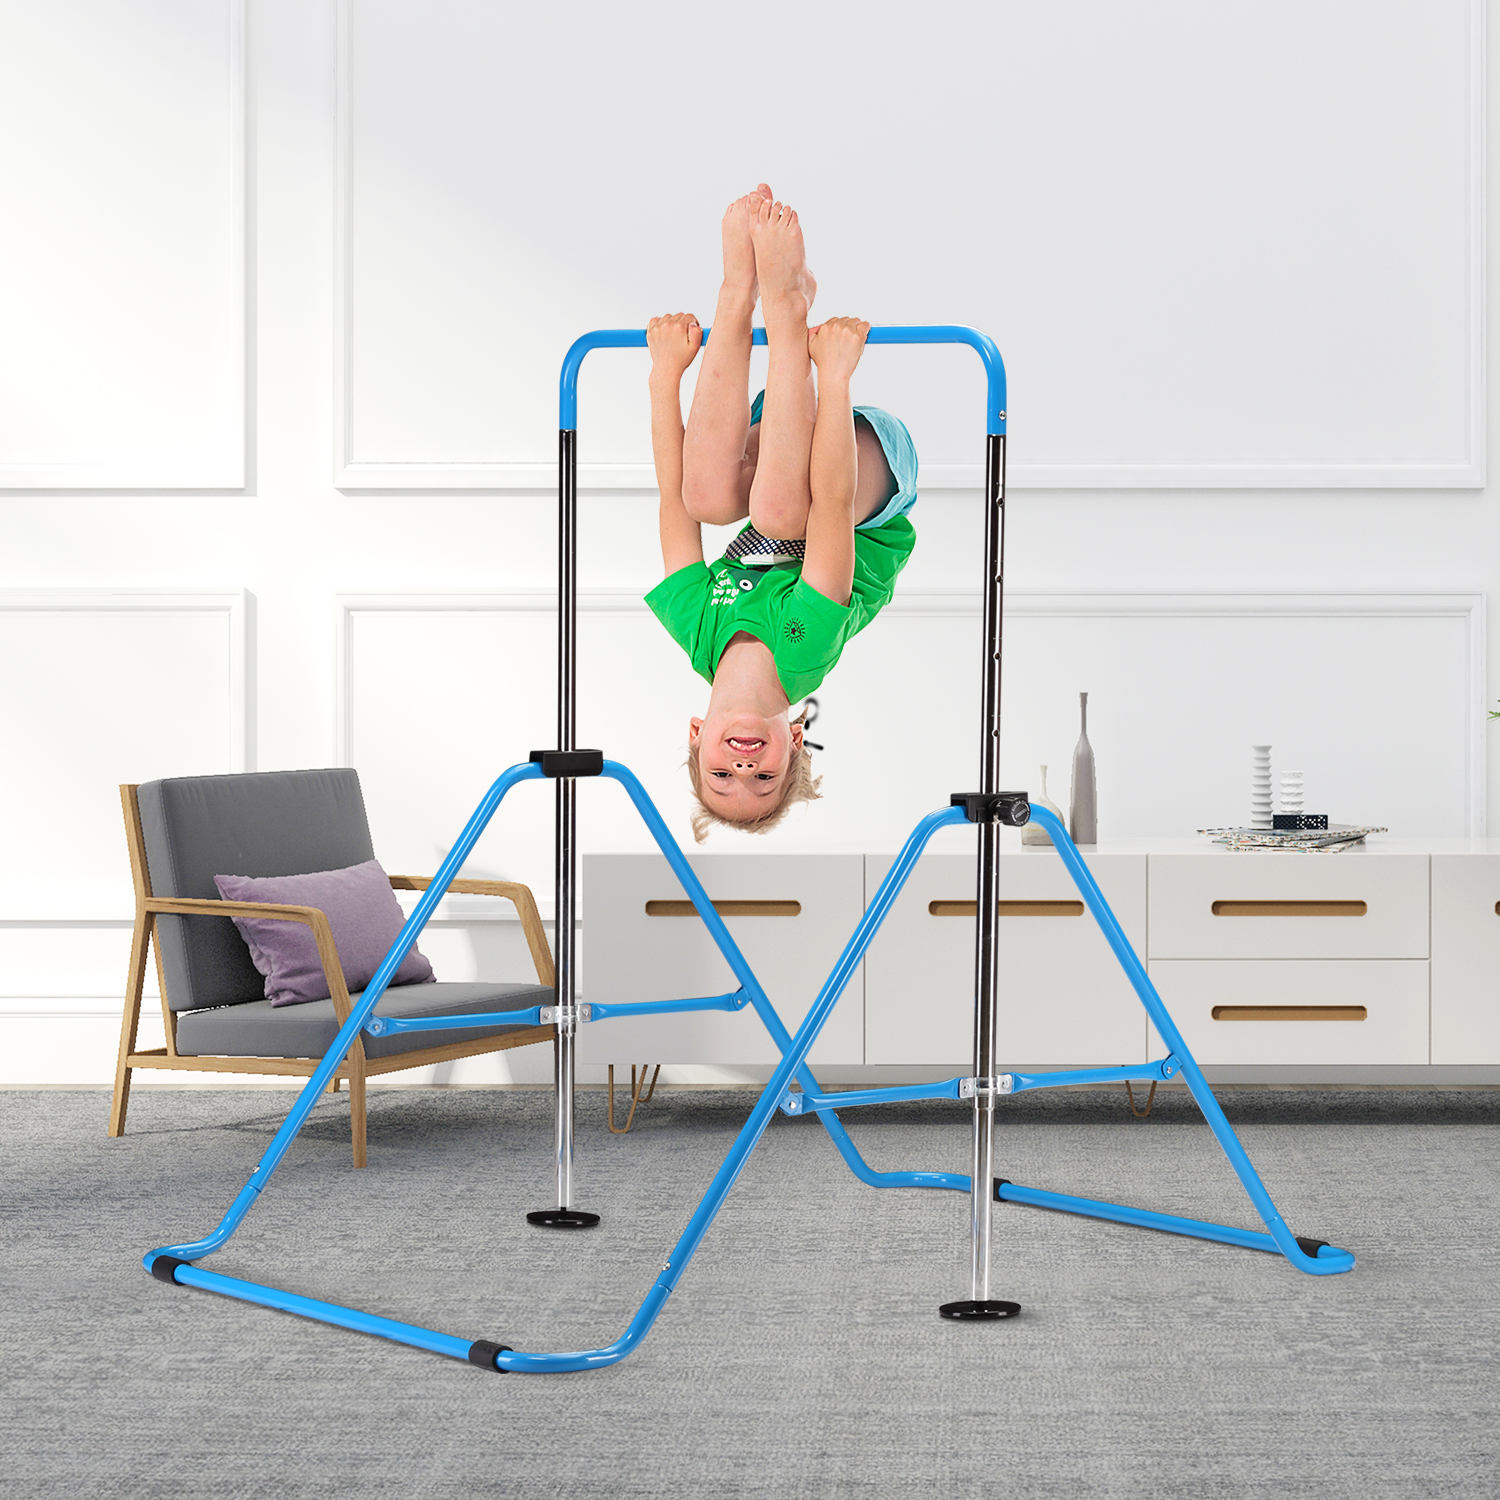 Ainfox Kids Gymnastics Bars Equipment for Home, Junior Expandable Horizontal Monkey Bar(Blue) - image 3 of 8